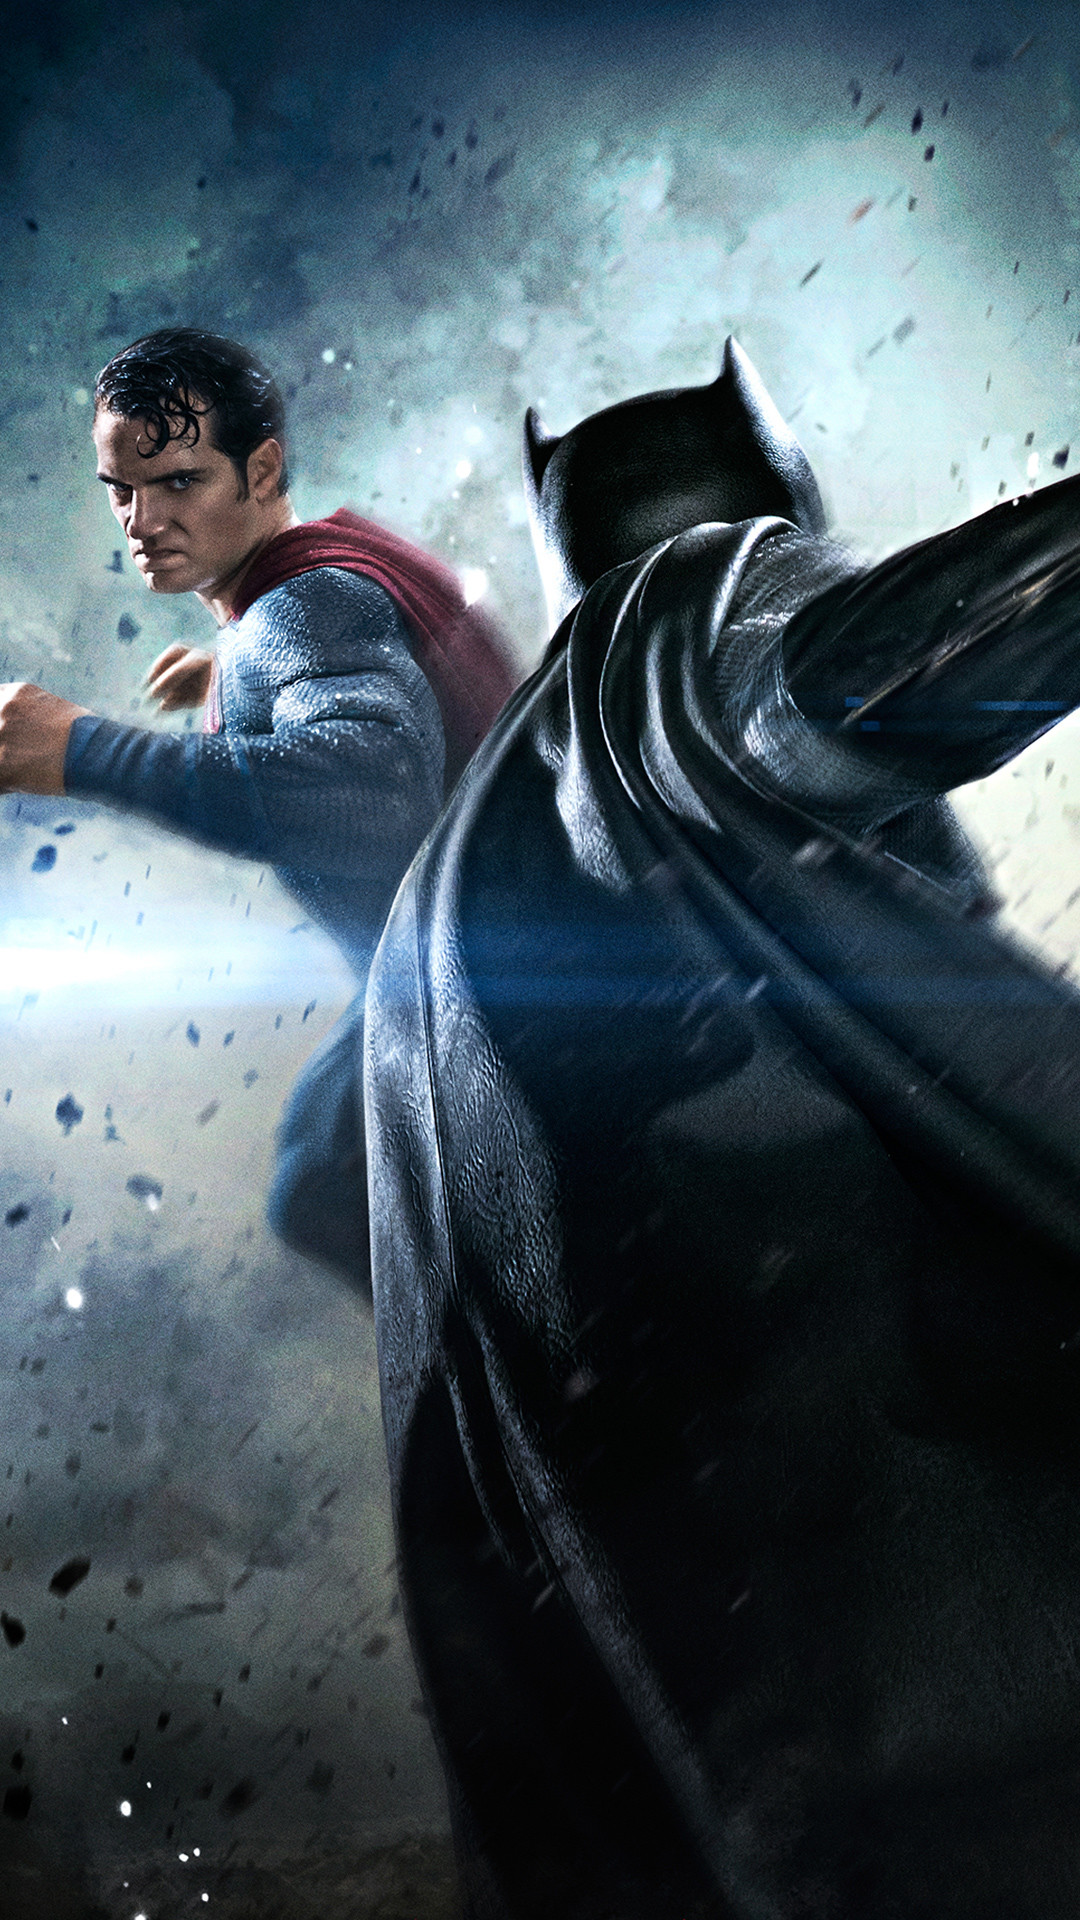 1080x1920 Batman vs Superman Movie Fight iPhone 6 Plus HD Wallpaper iPhone Lockscreen  Image